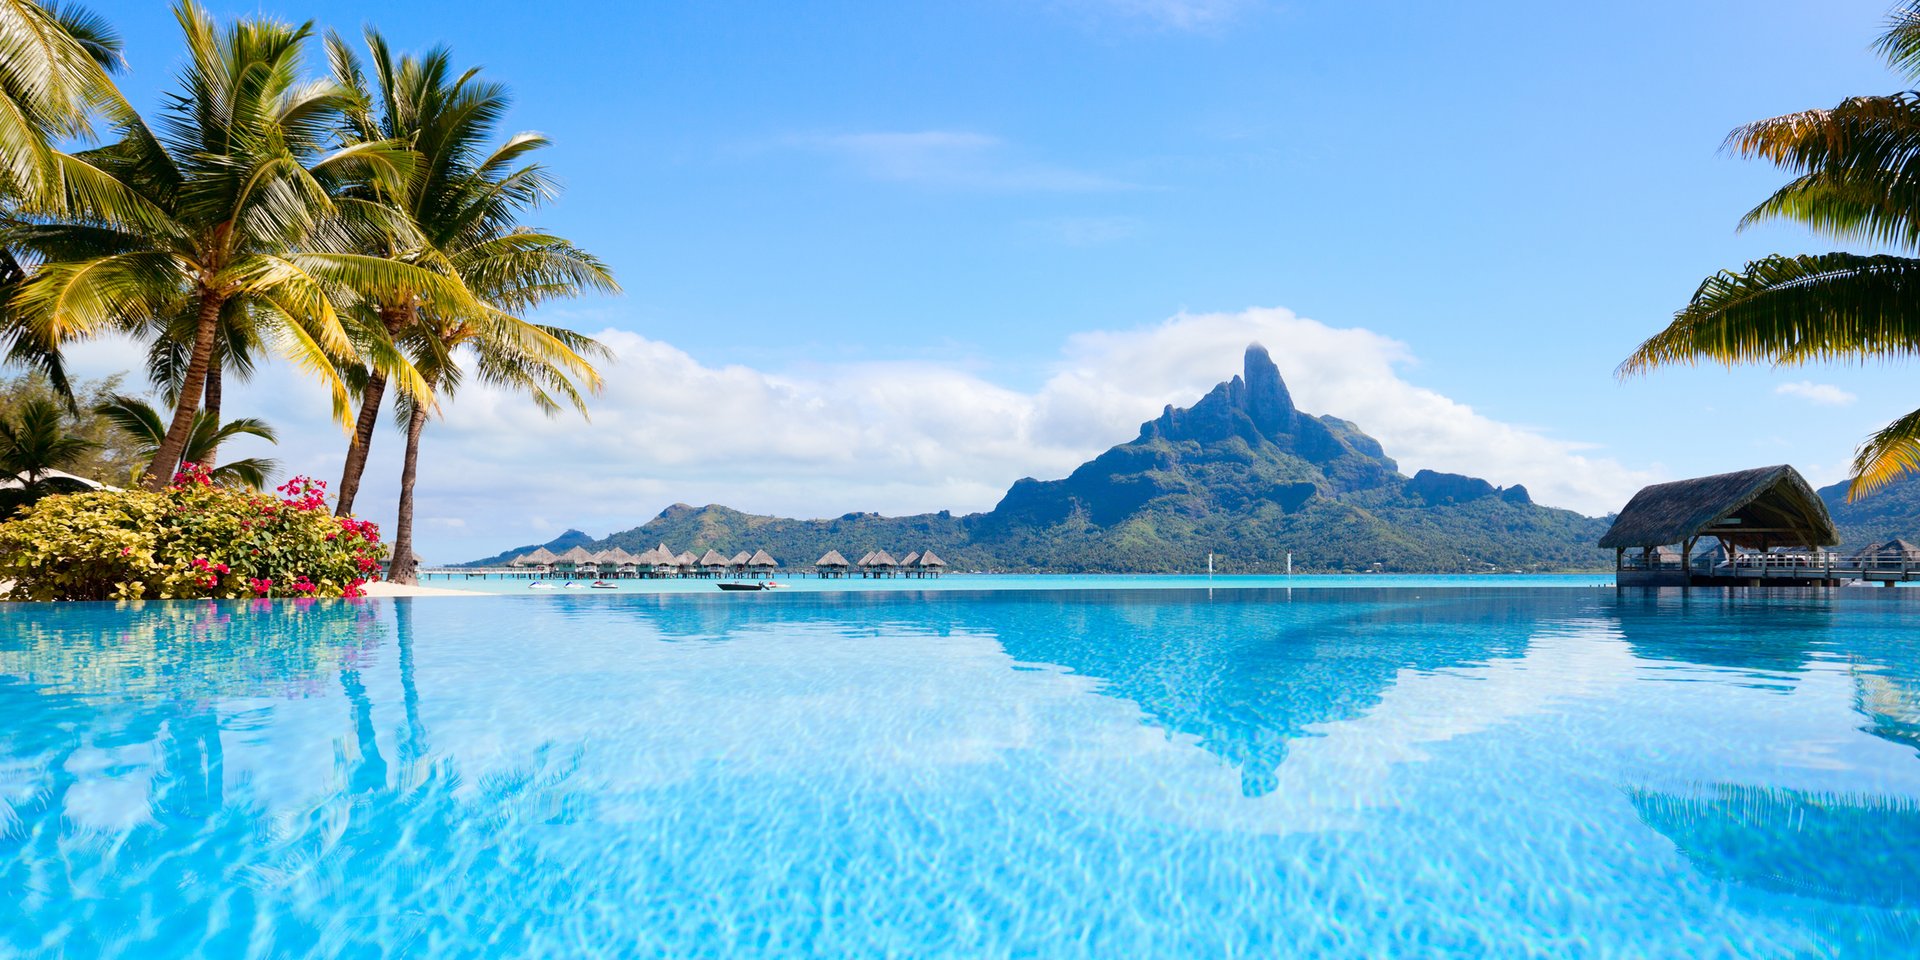 Indulge in overwater bungalows in Bora Bora on your Tahiti vacation